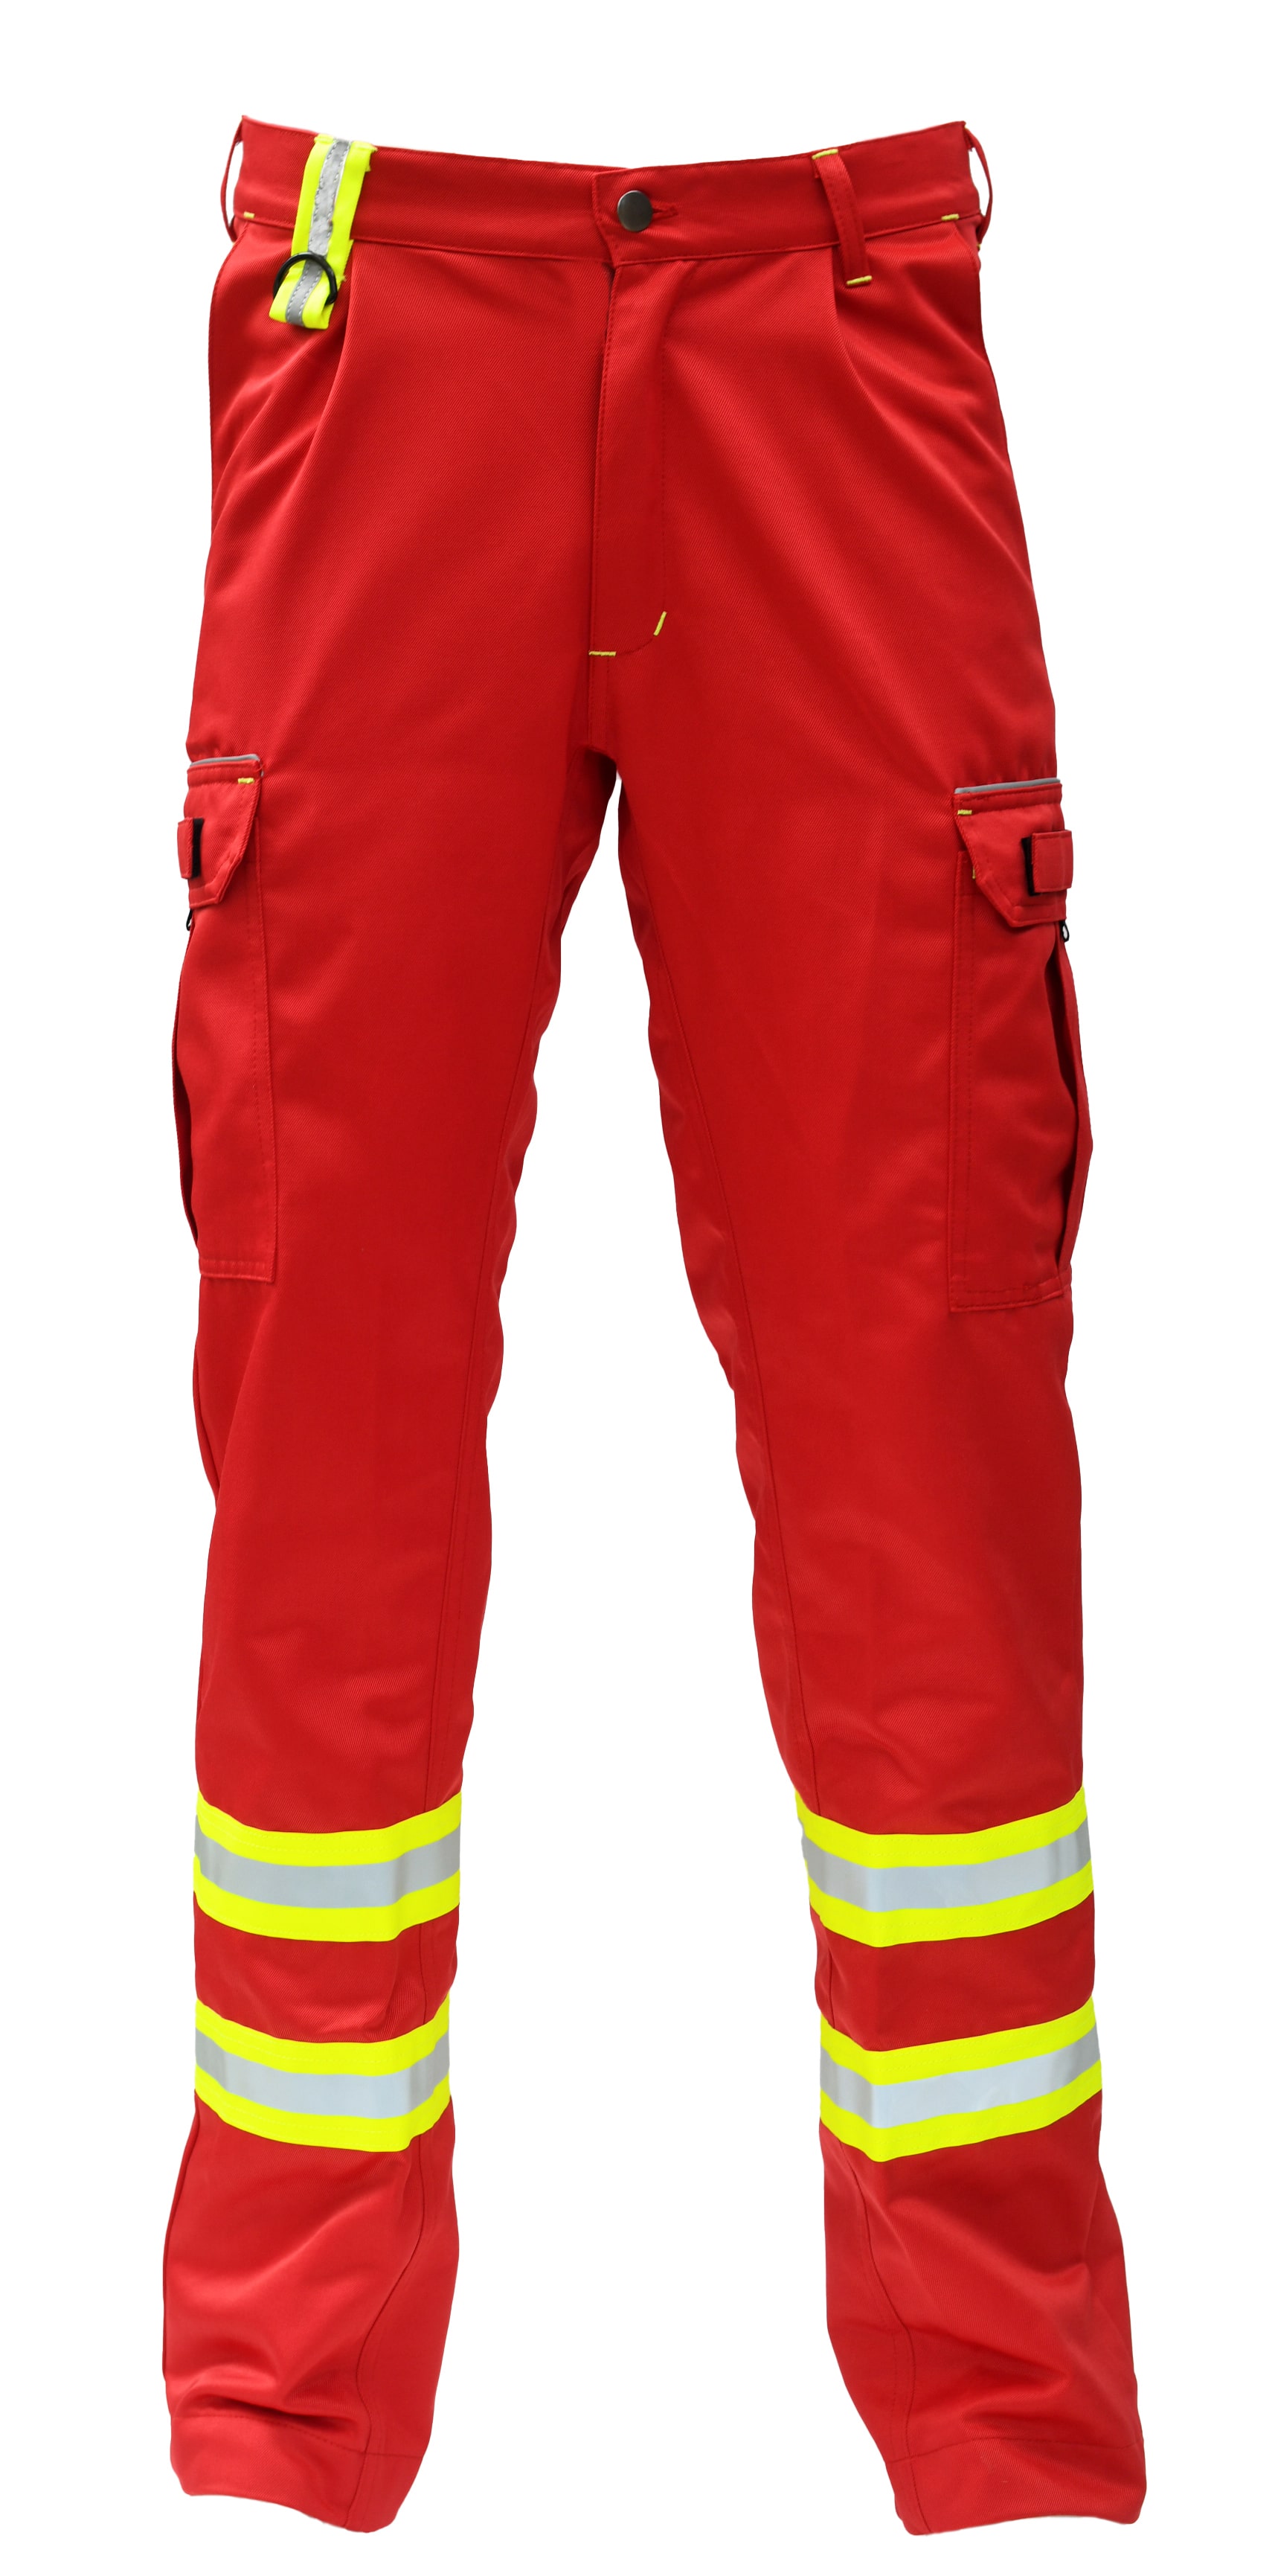 Rescuewear Unisex Hose 33455 Wasserrettung Rot